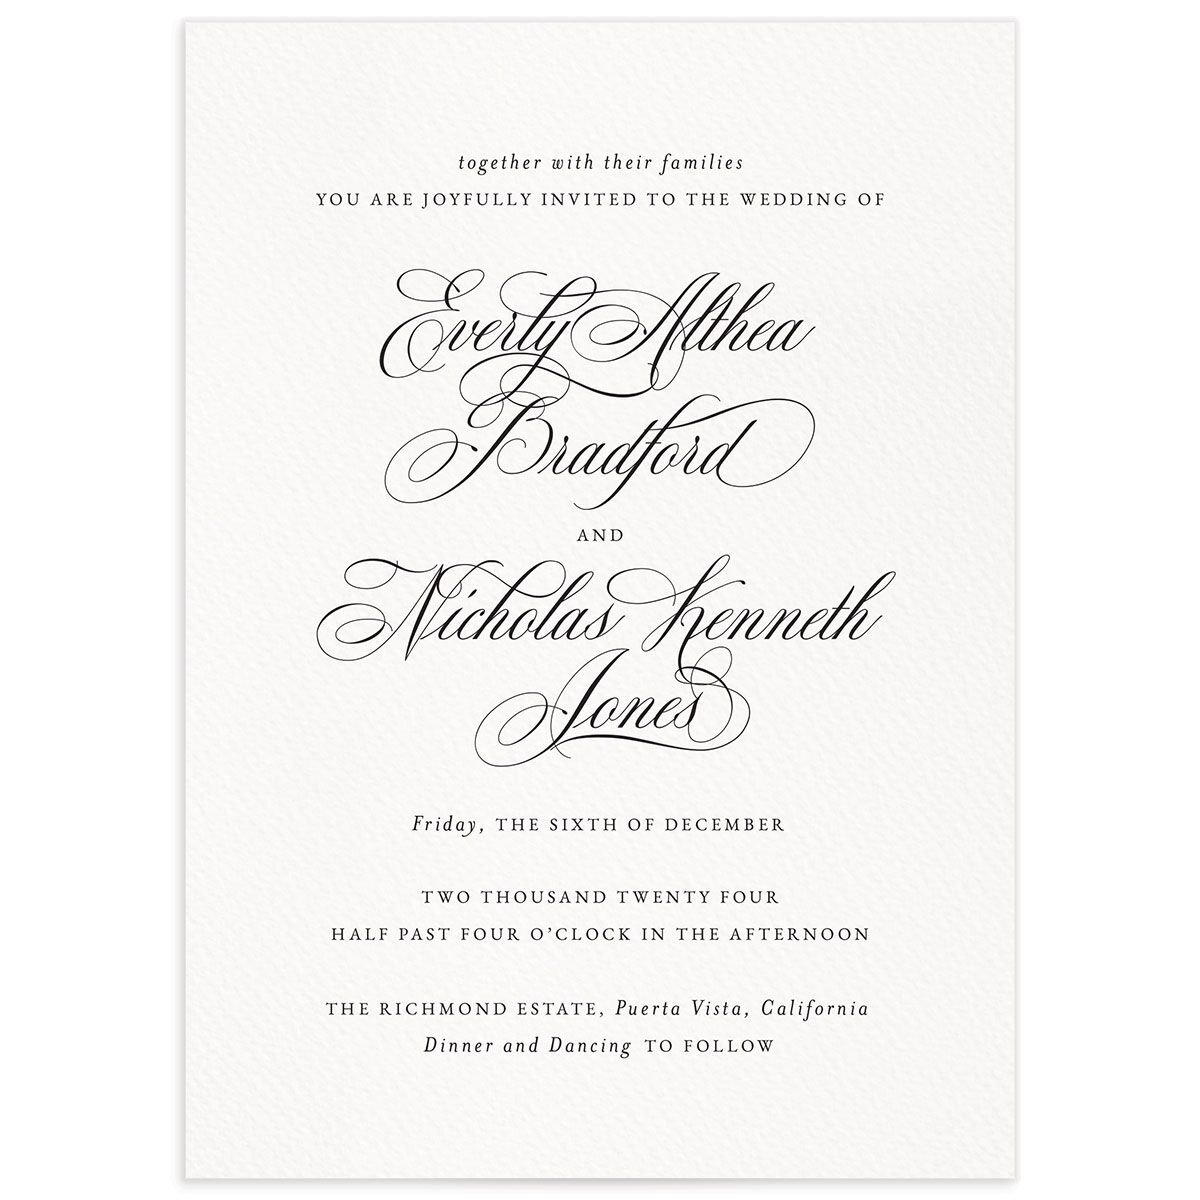 Exquisite Regency Wedding Invitations